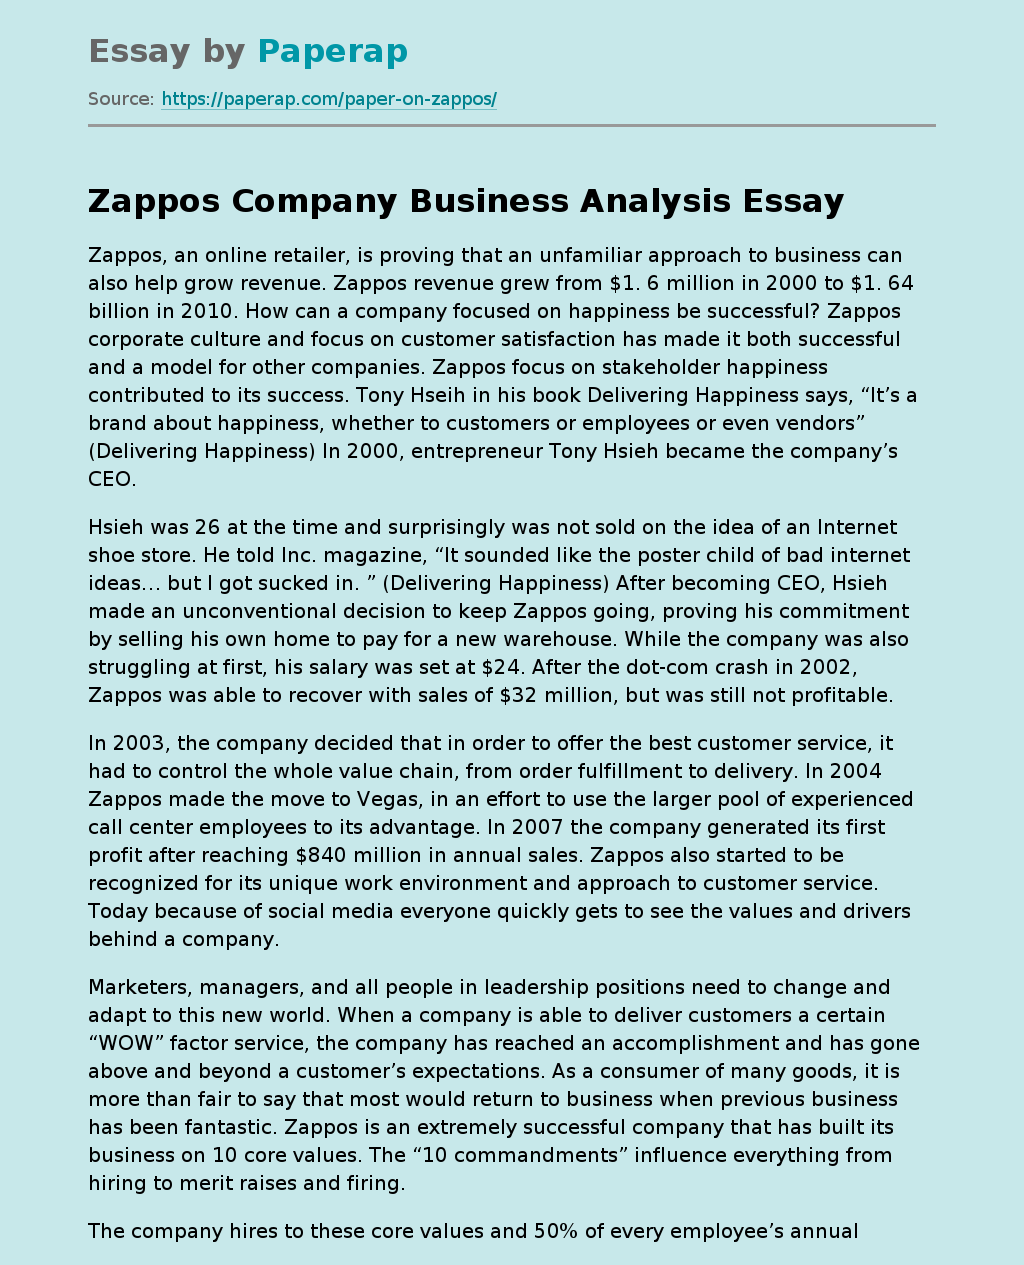 Zappos Company Business Analysis